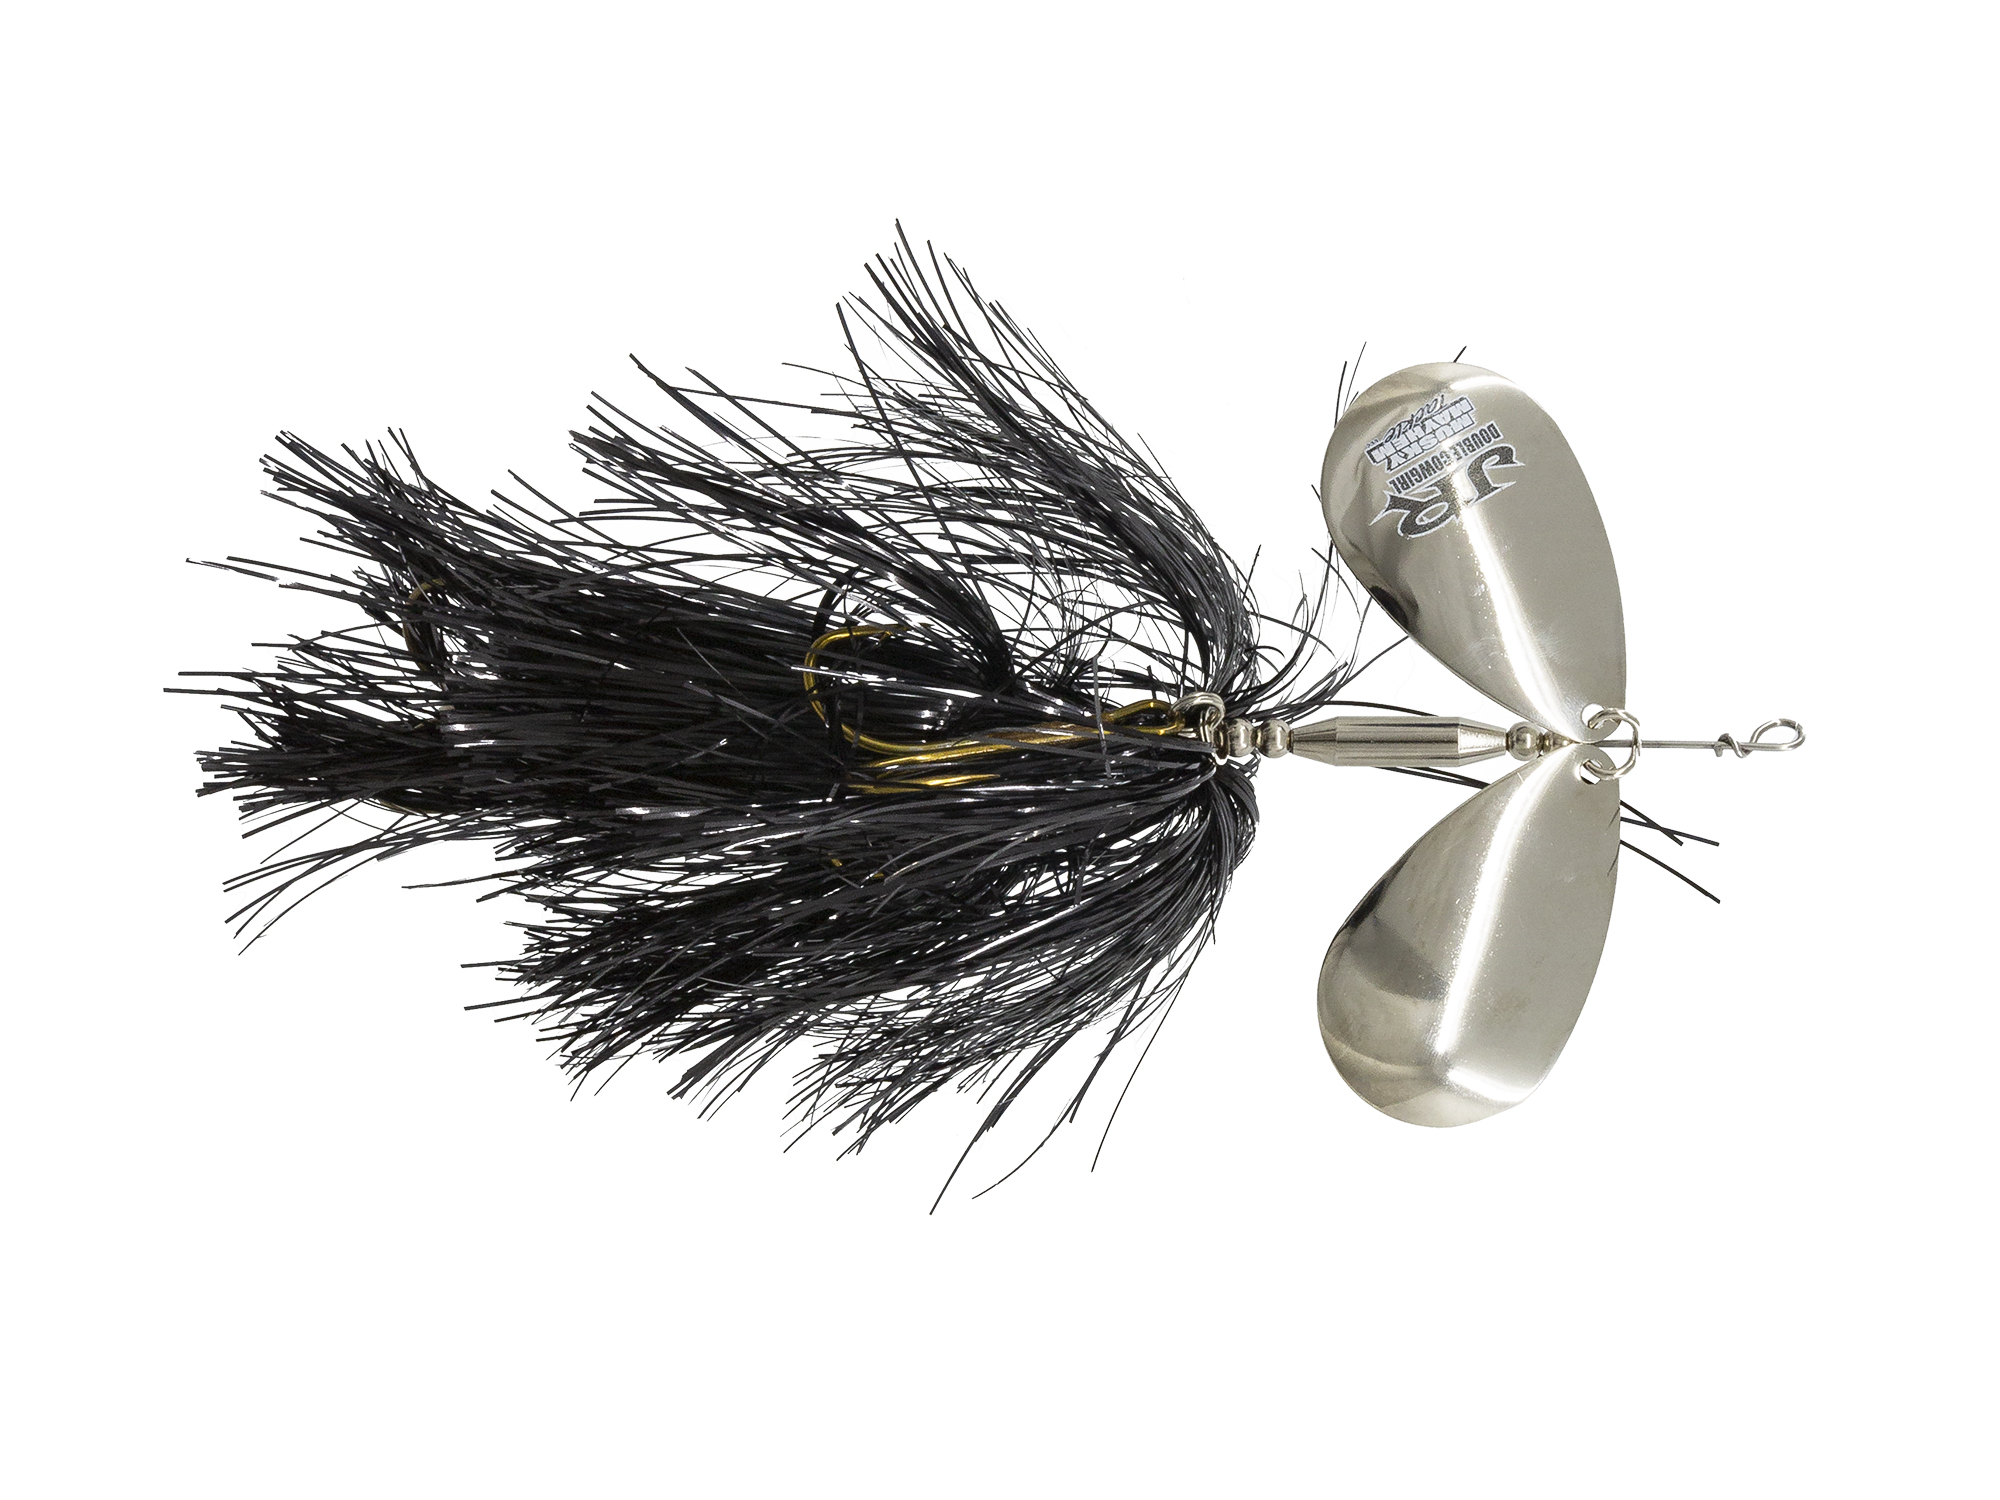 Buy TT Lures Nickel Colorado Jig Spinners Fishing Lure - Size 2